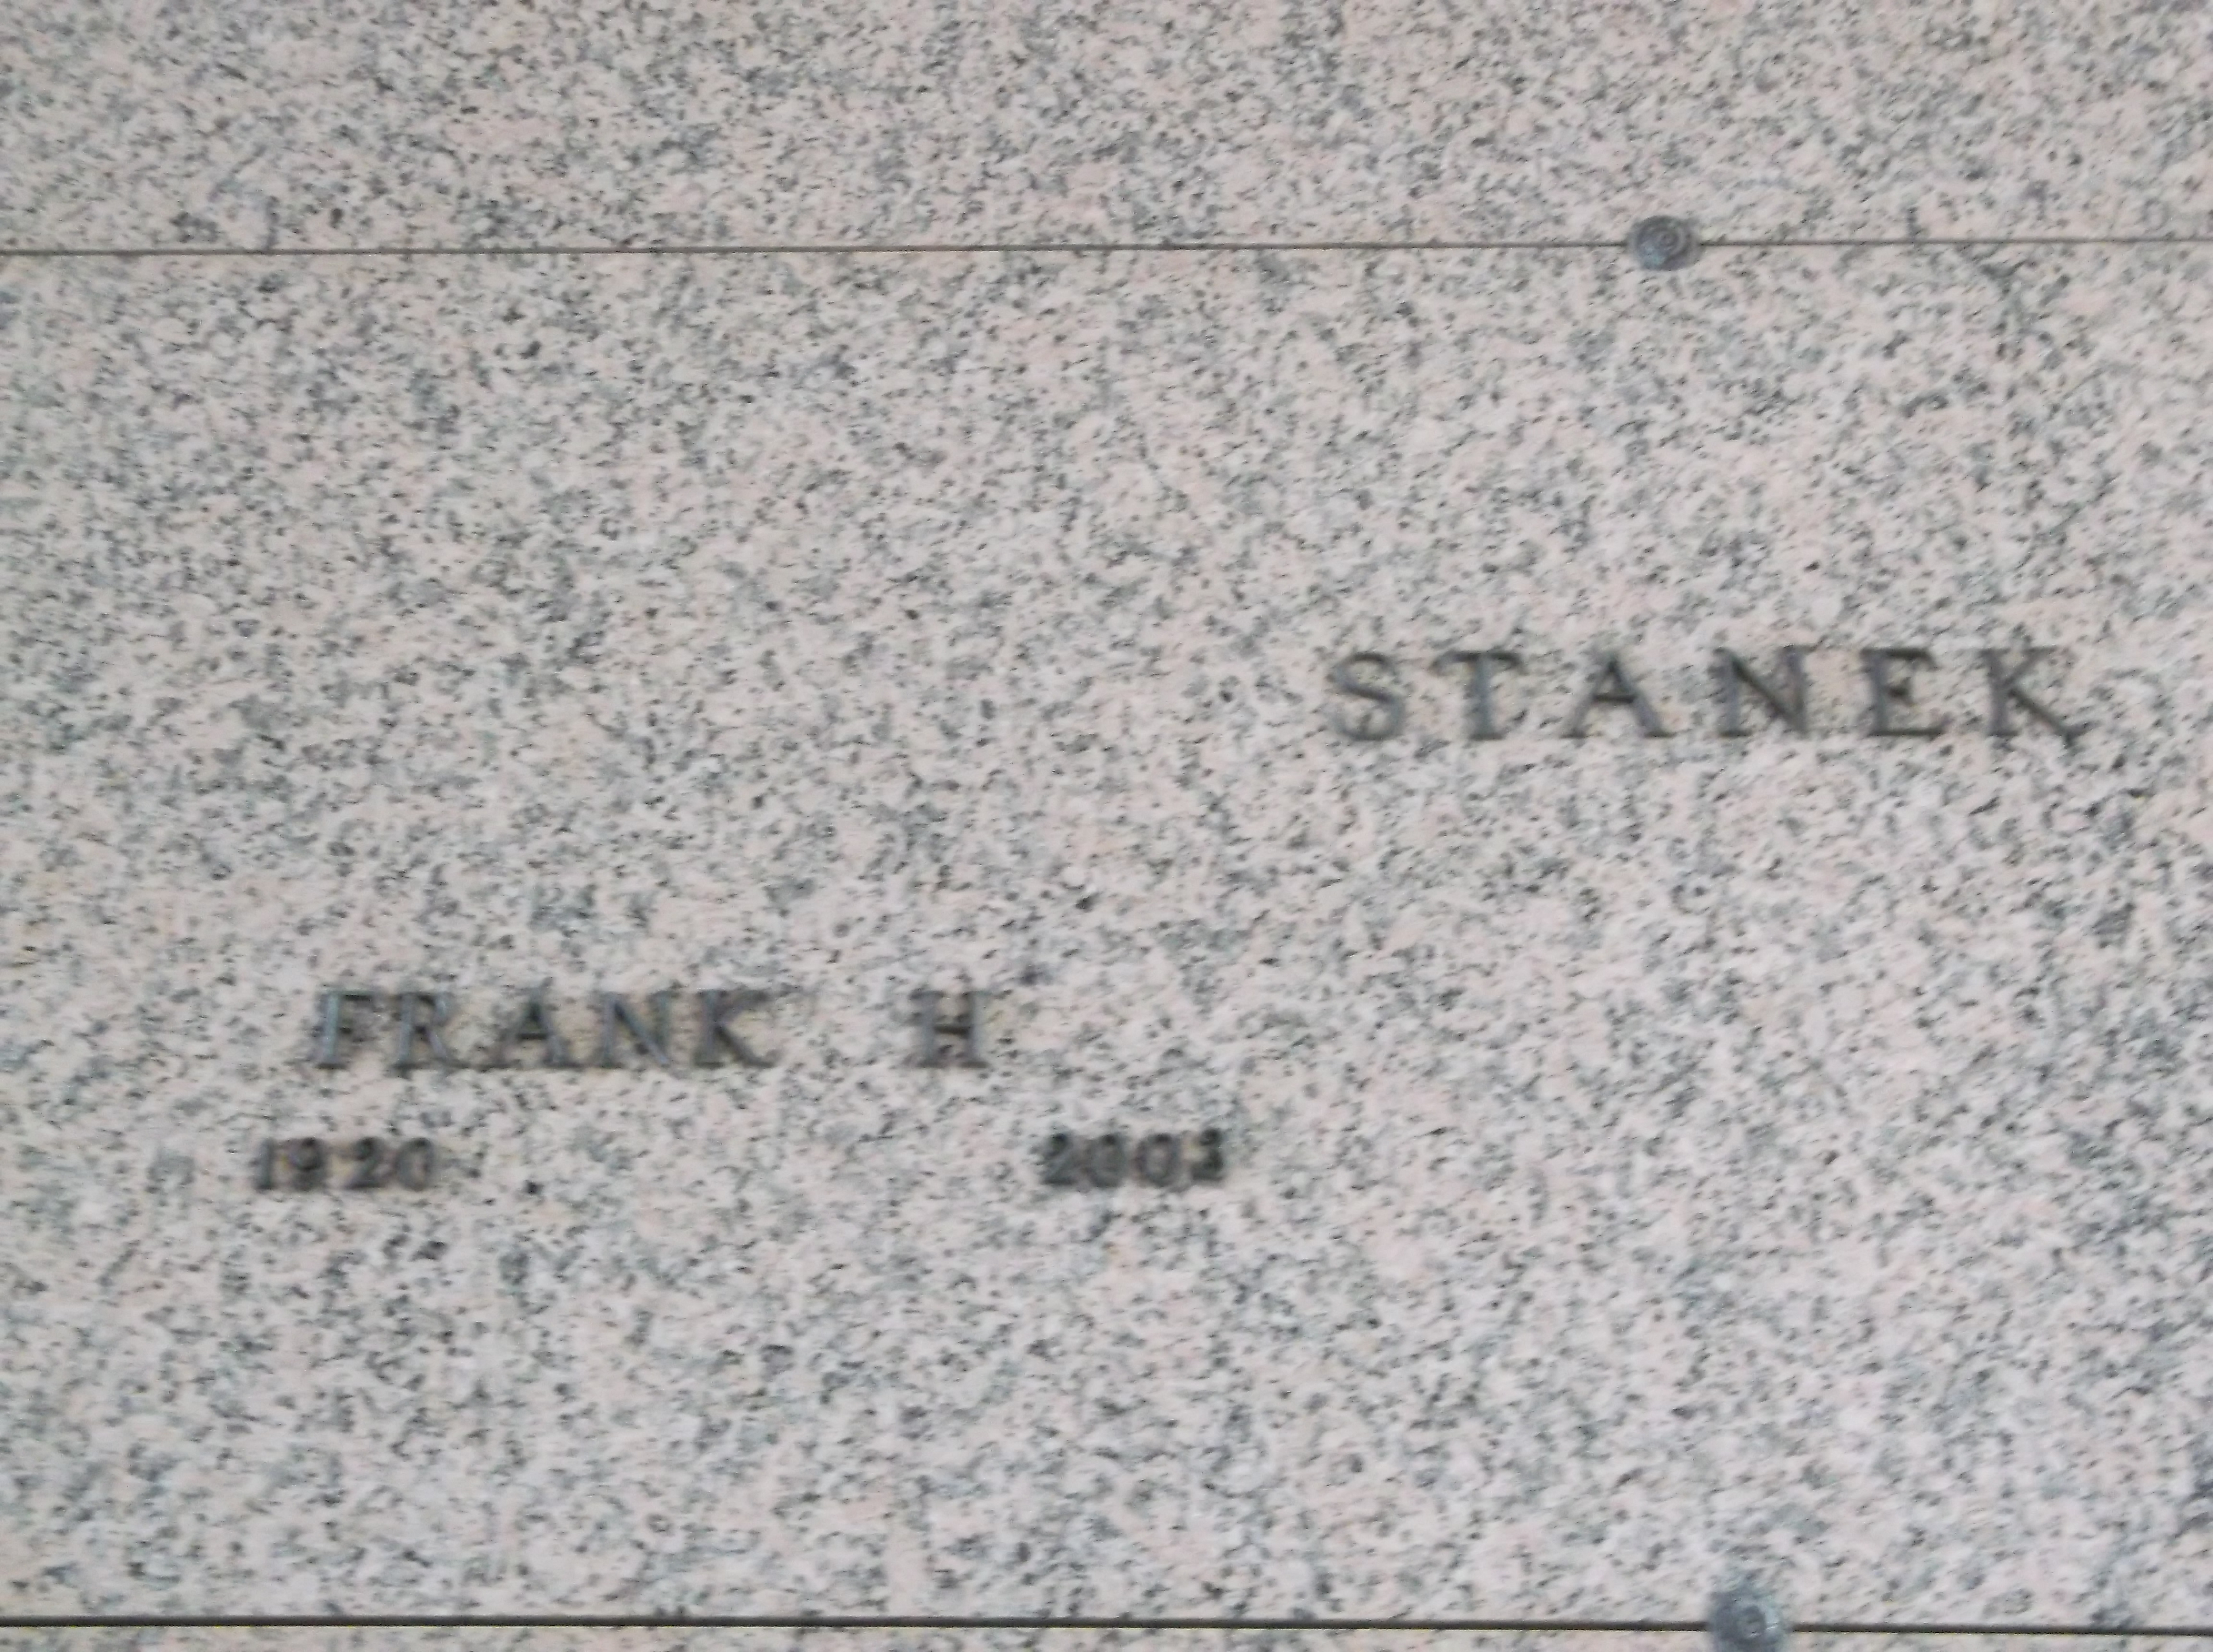 Frank H Stanek